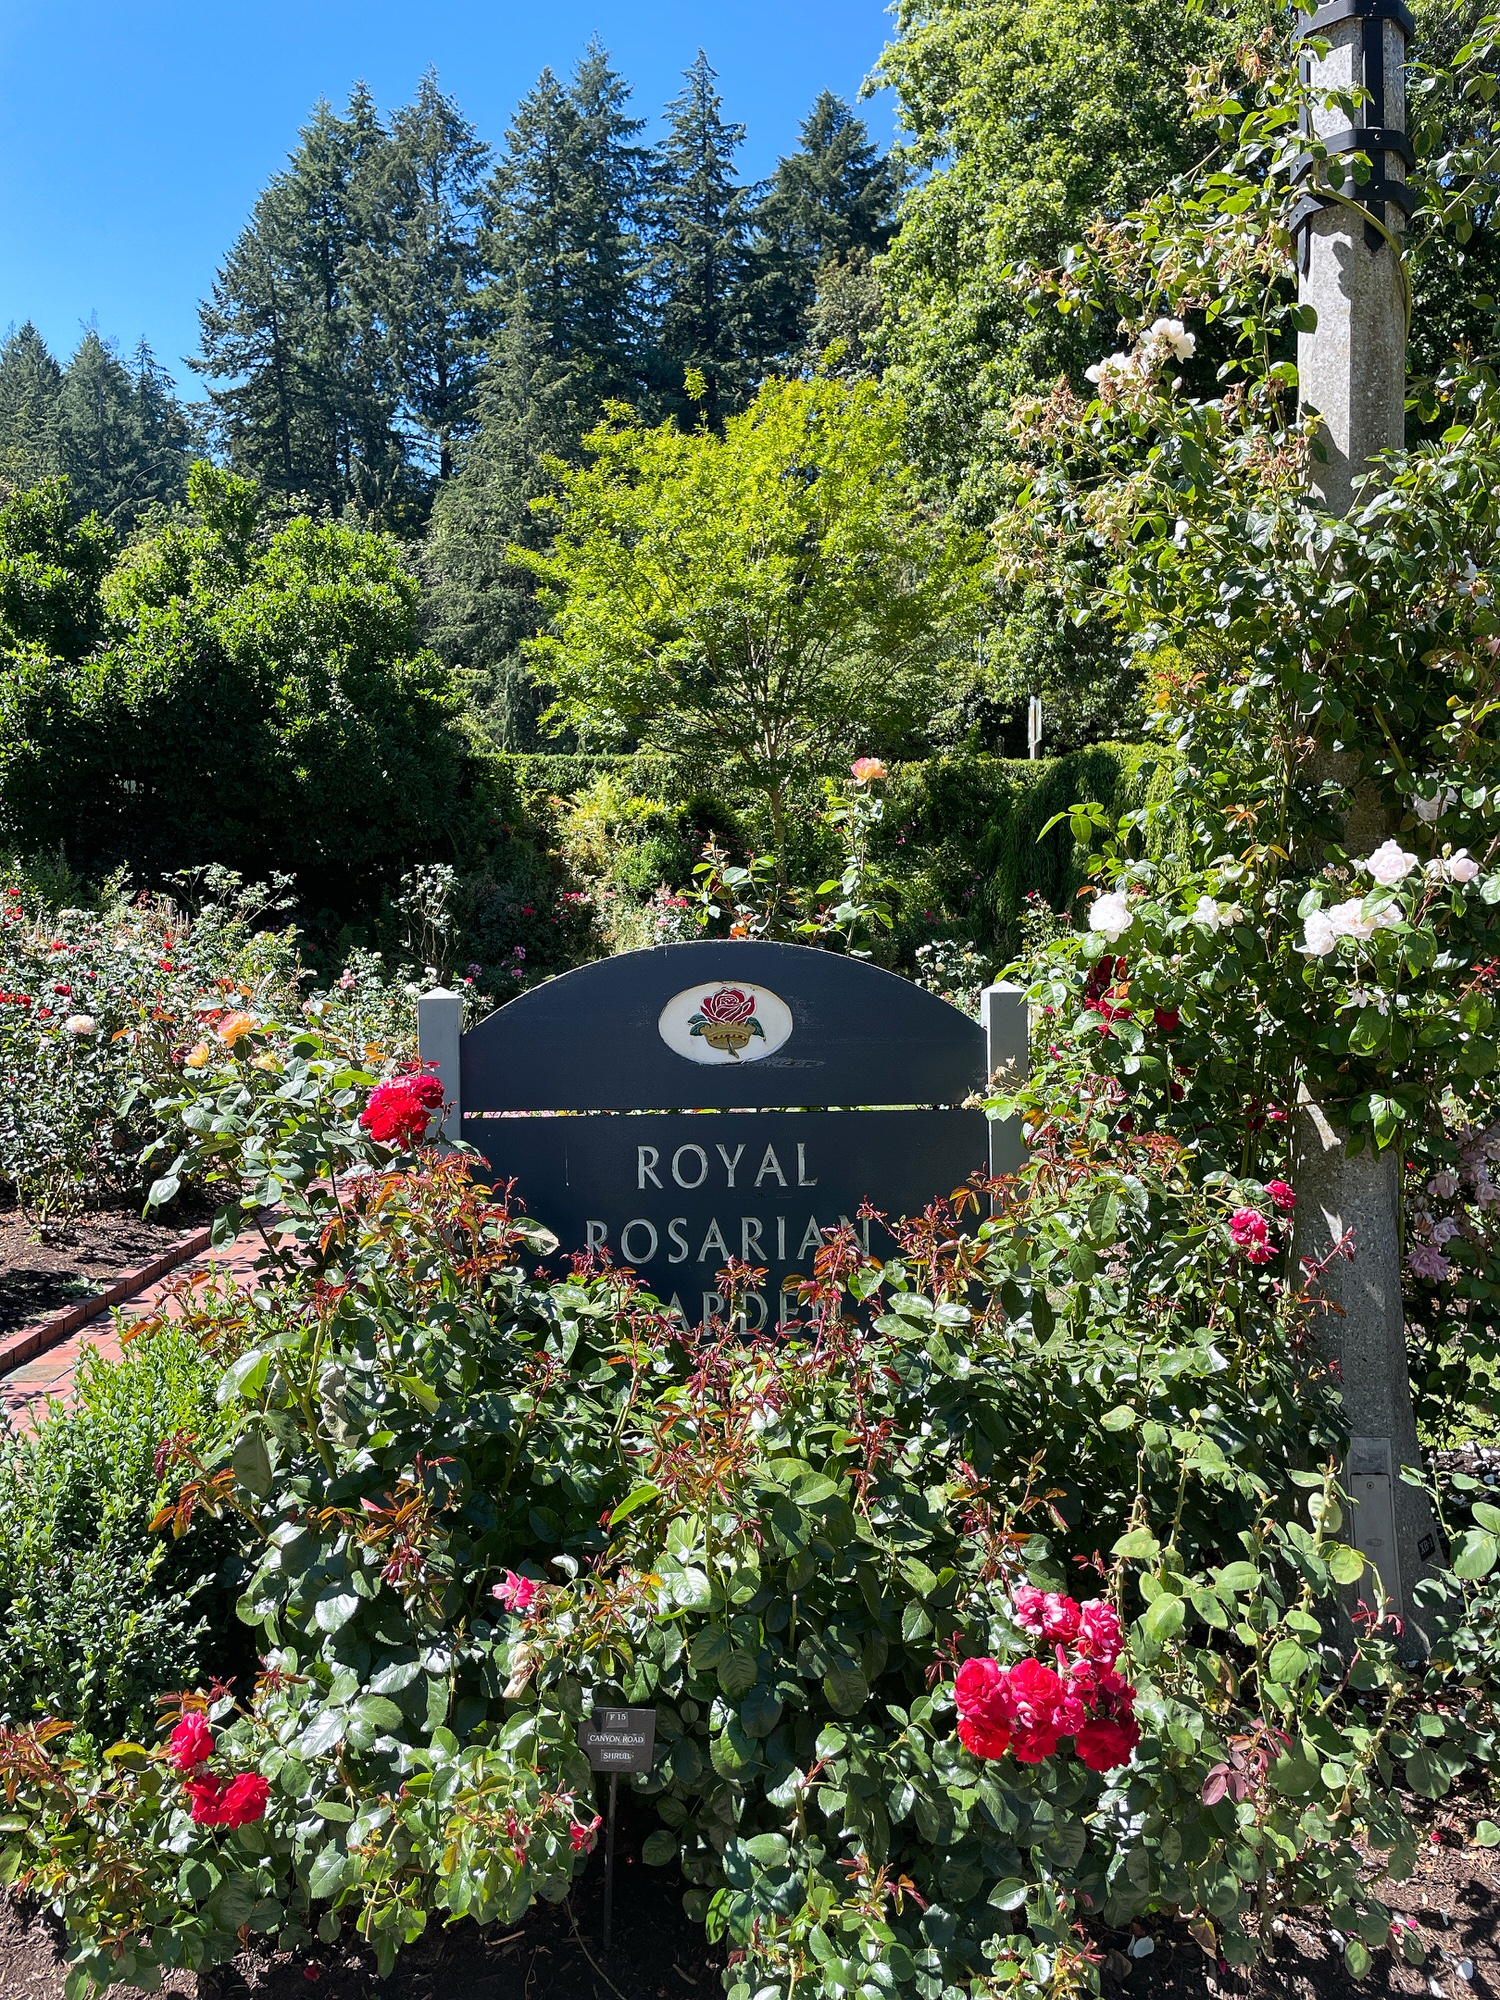 2023波特蘭 Portland15個必去景點
Pioneer Courthouse
全球最大獨立書店 Powell’s Books
Portland NW 23rd Ave International Rose Test Garden 